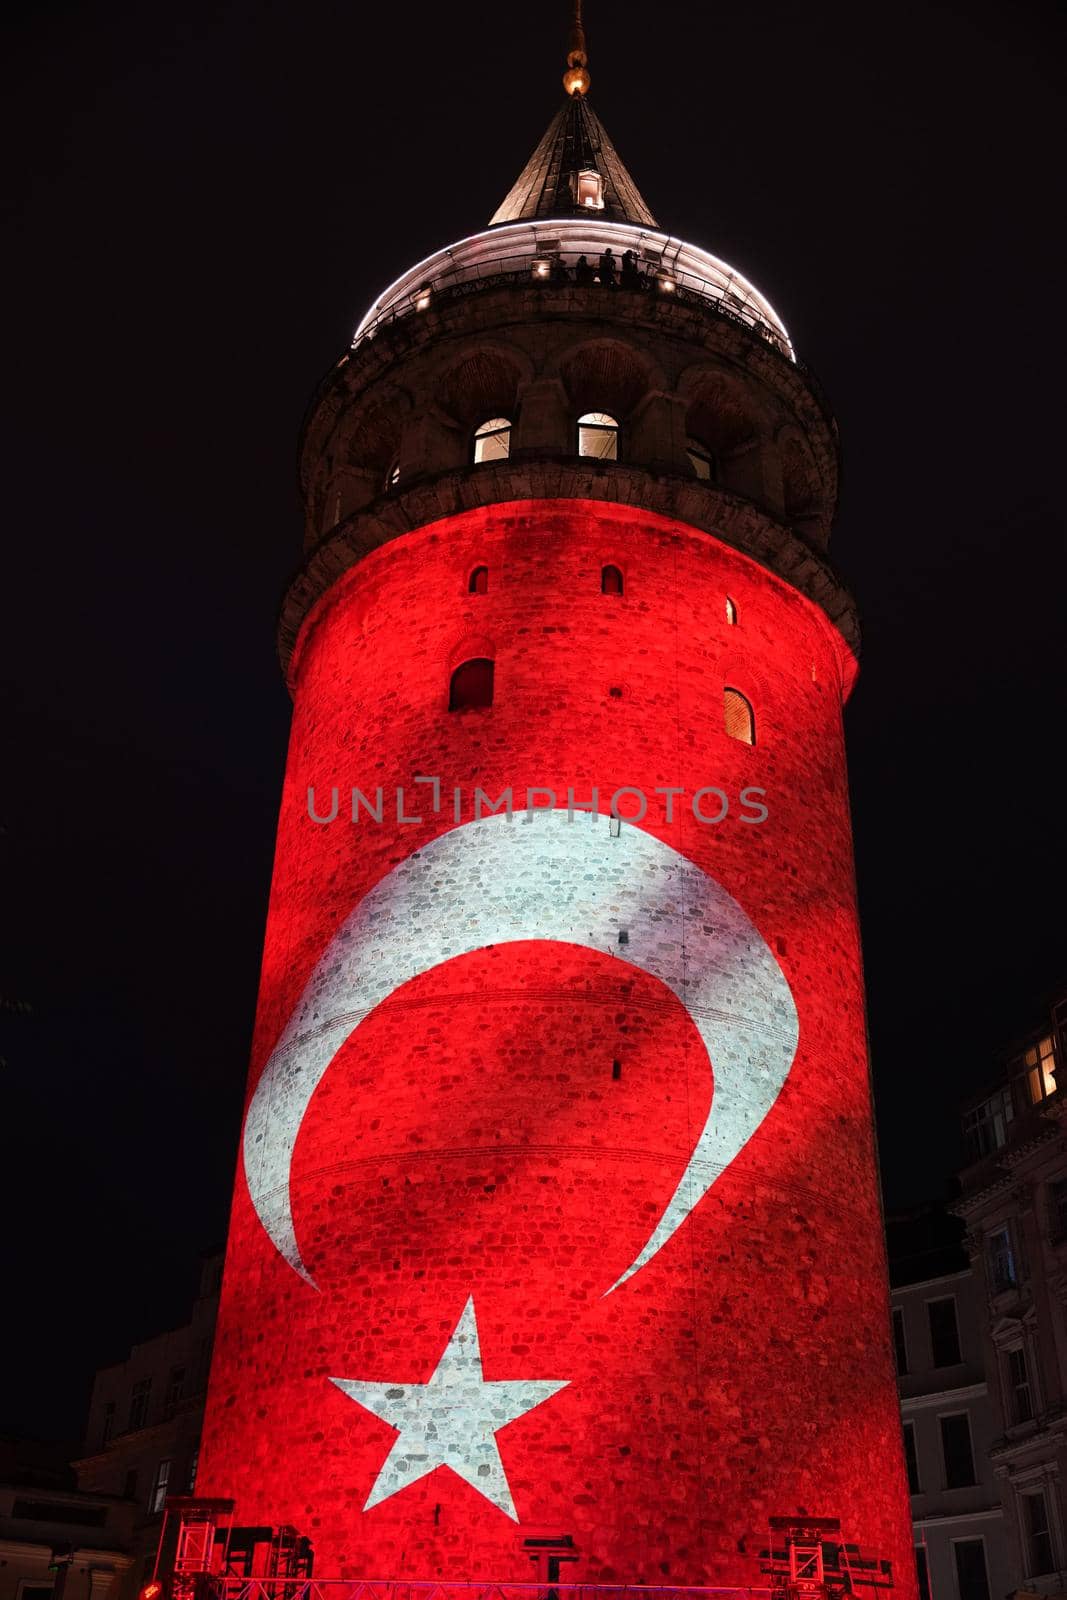 Galata Tower in Galata District, Istanbul City, Turkey